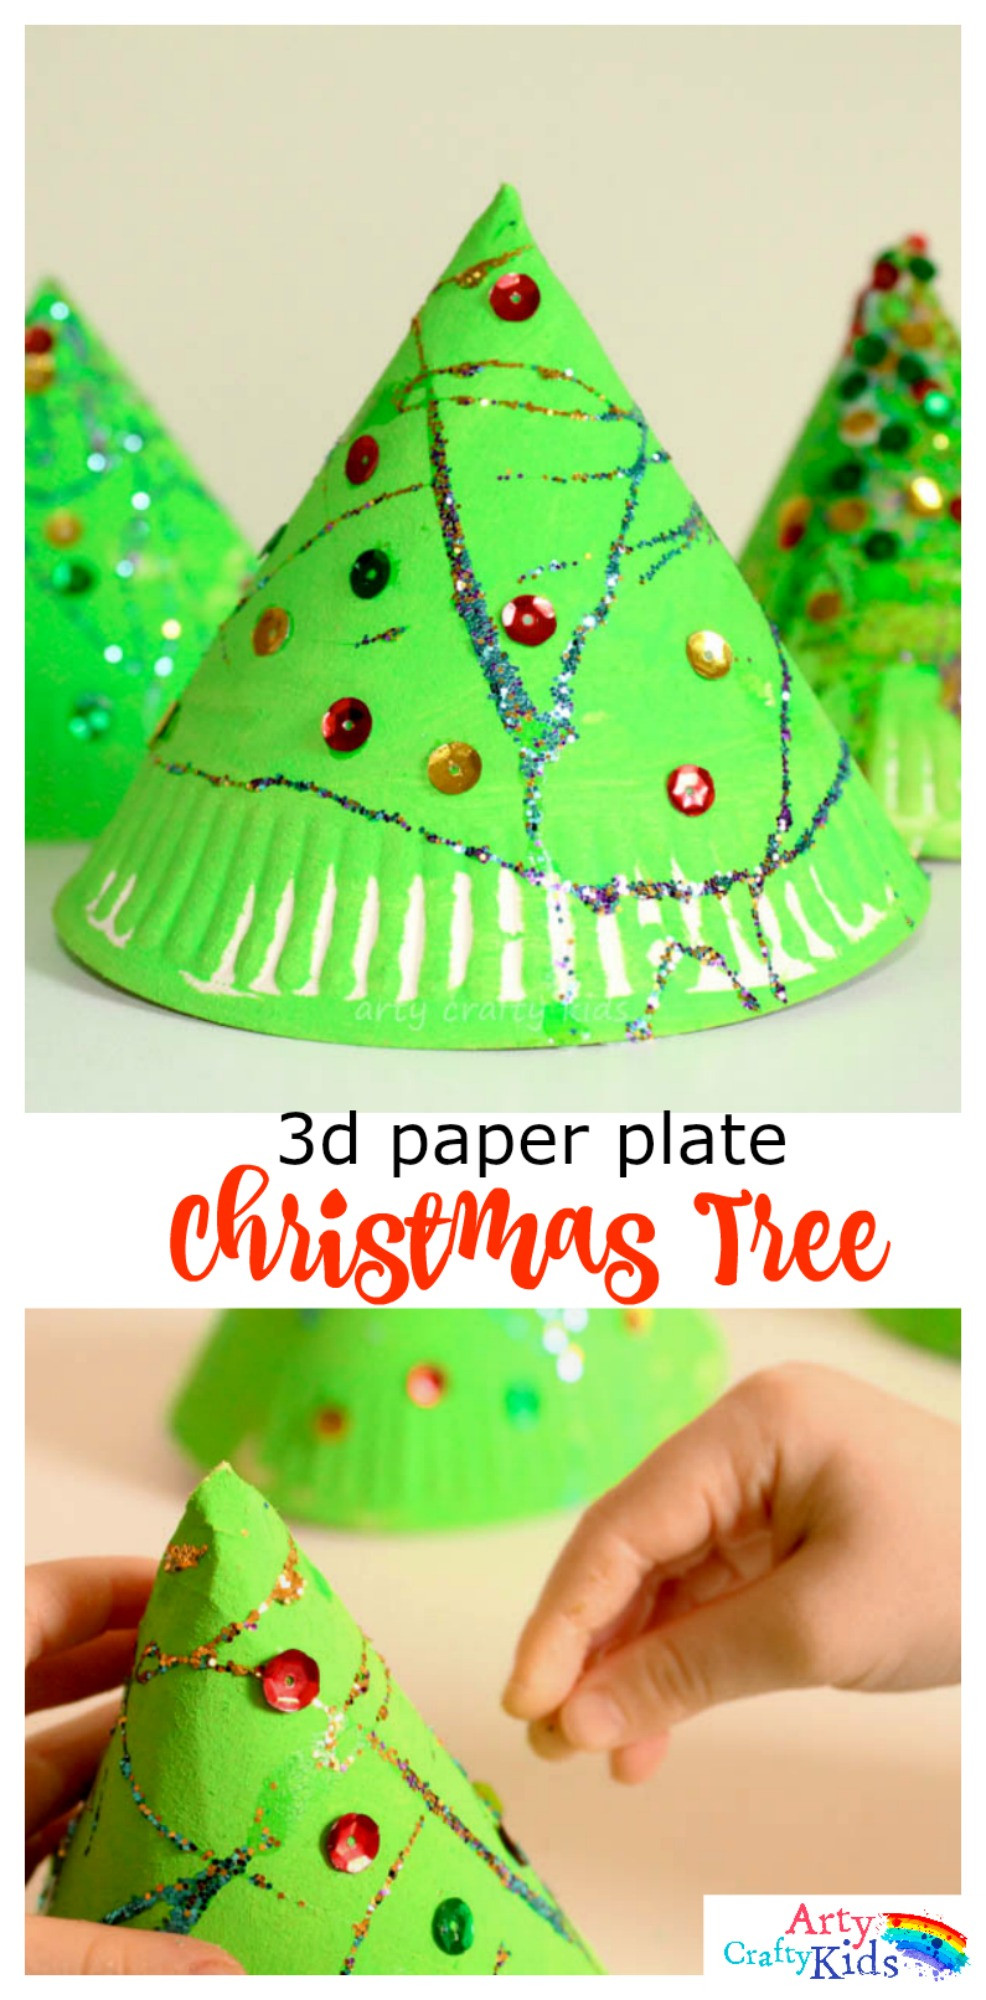 Easy Preschool Craft
 Super Fun 3d Paper Plate Christmas Tree Craft